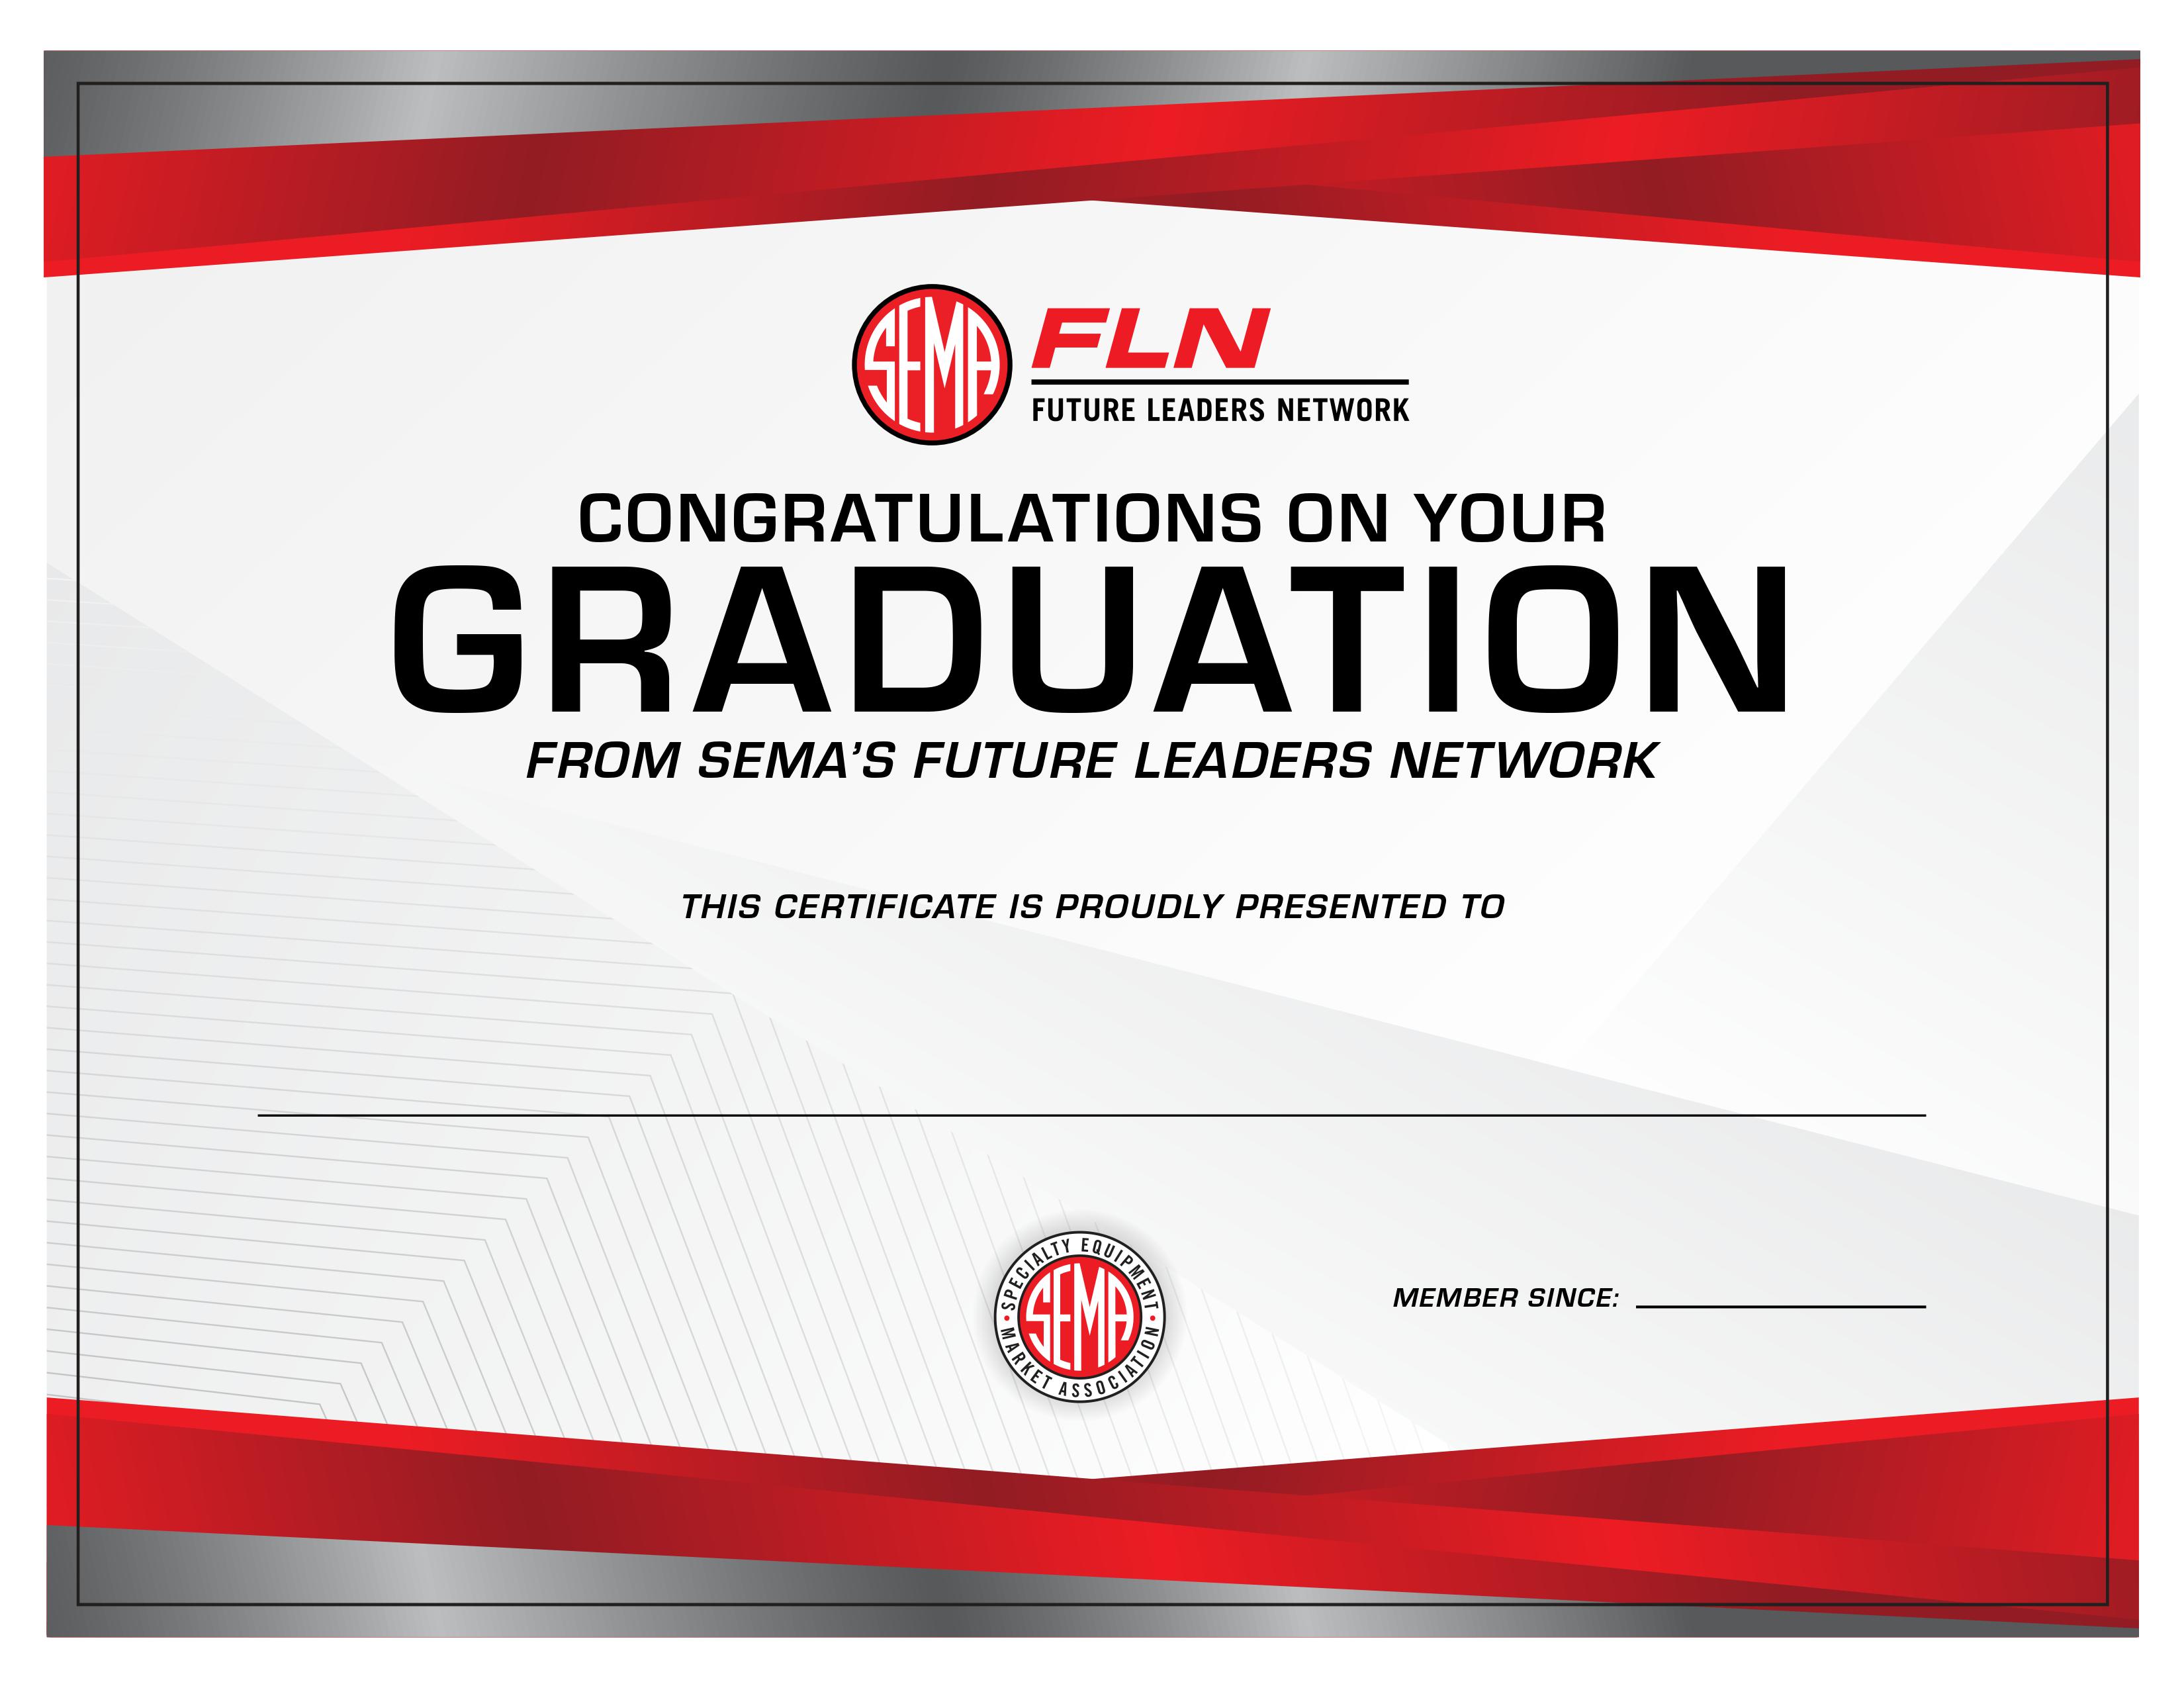 New FLN Program Celebrates Graduating Members  